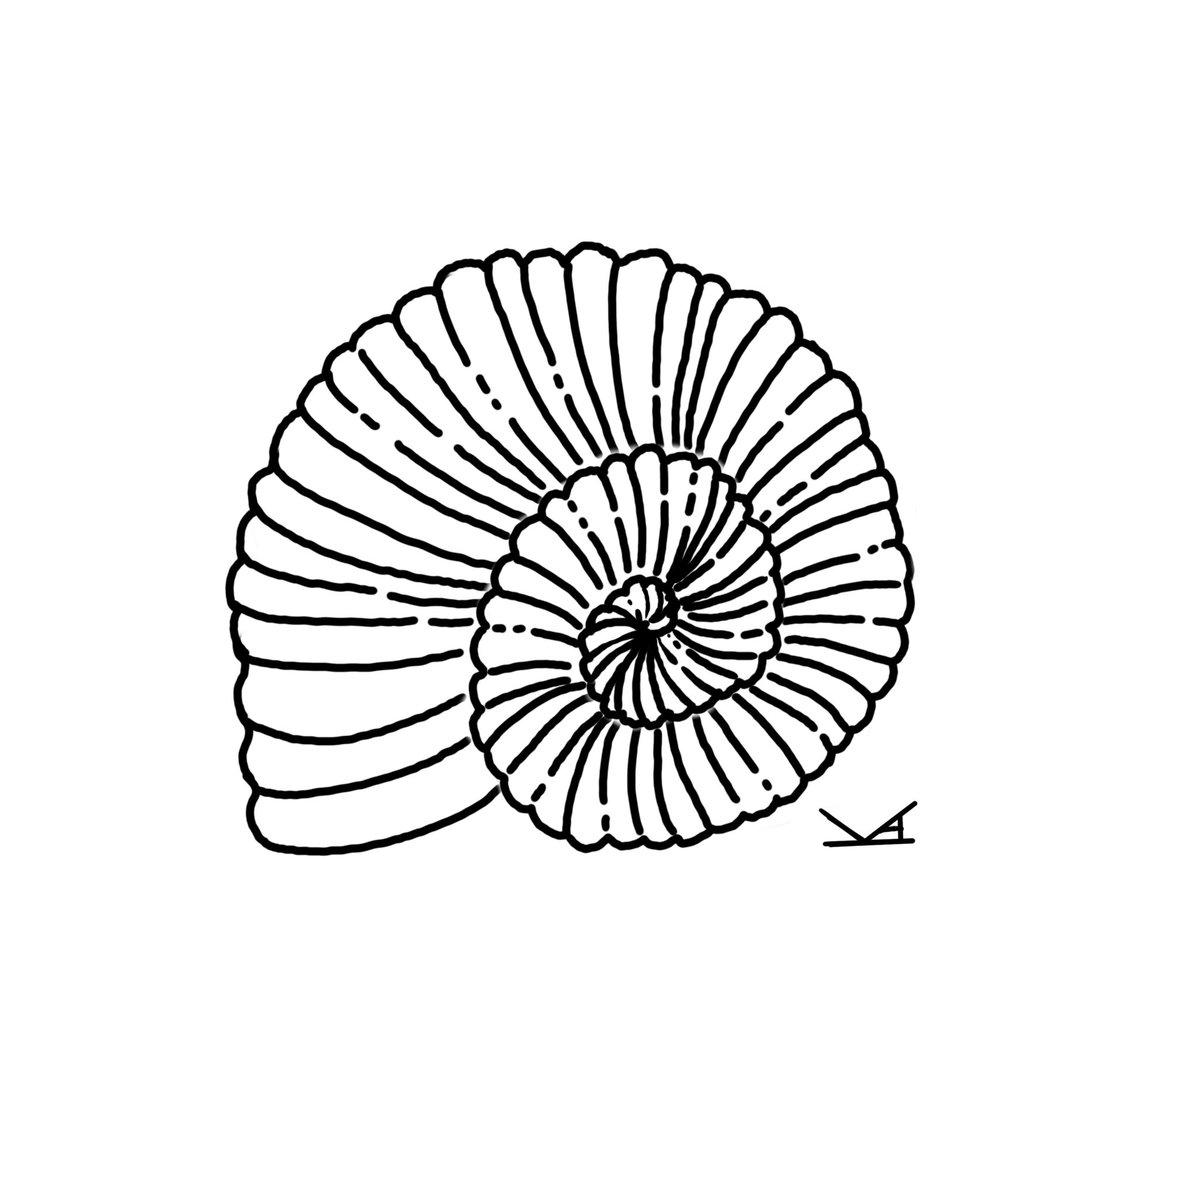 Fossil doodles -T-Rex and Ammonite 
#fossil #trex #ammonite #trexskull #ammonitefossil #dinosaurart #fossilart #art #digitalart #ArtistOnTwitter